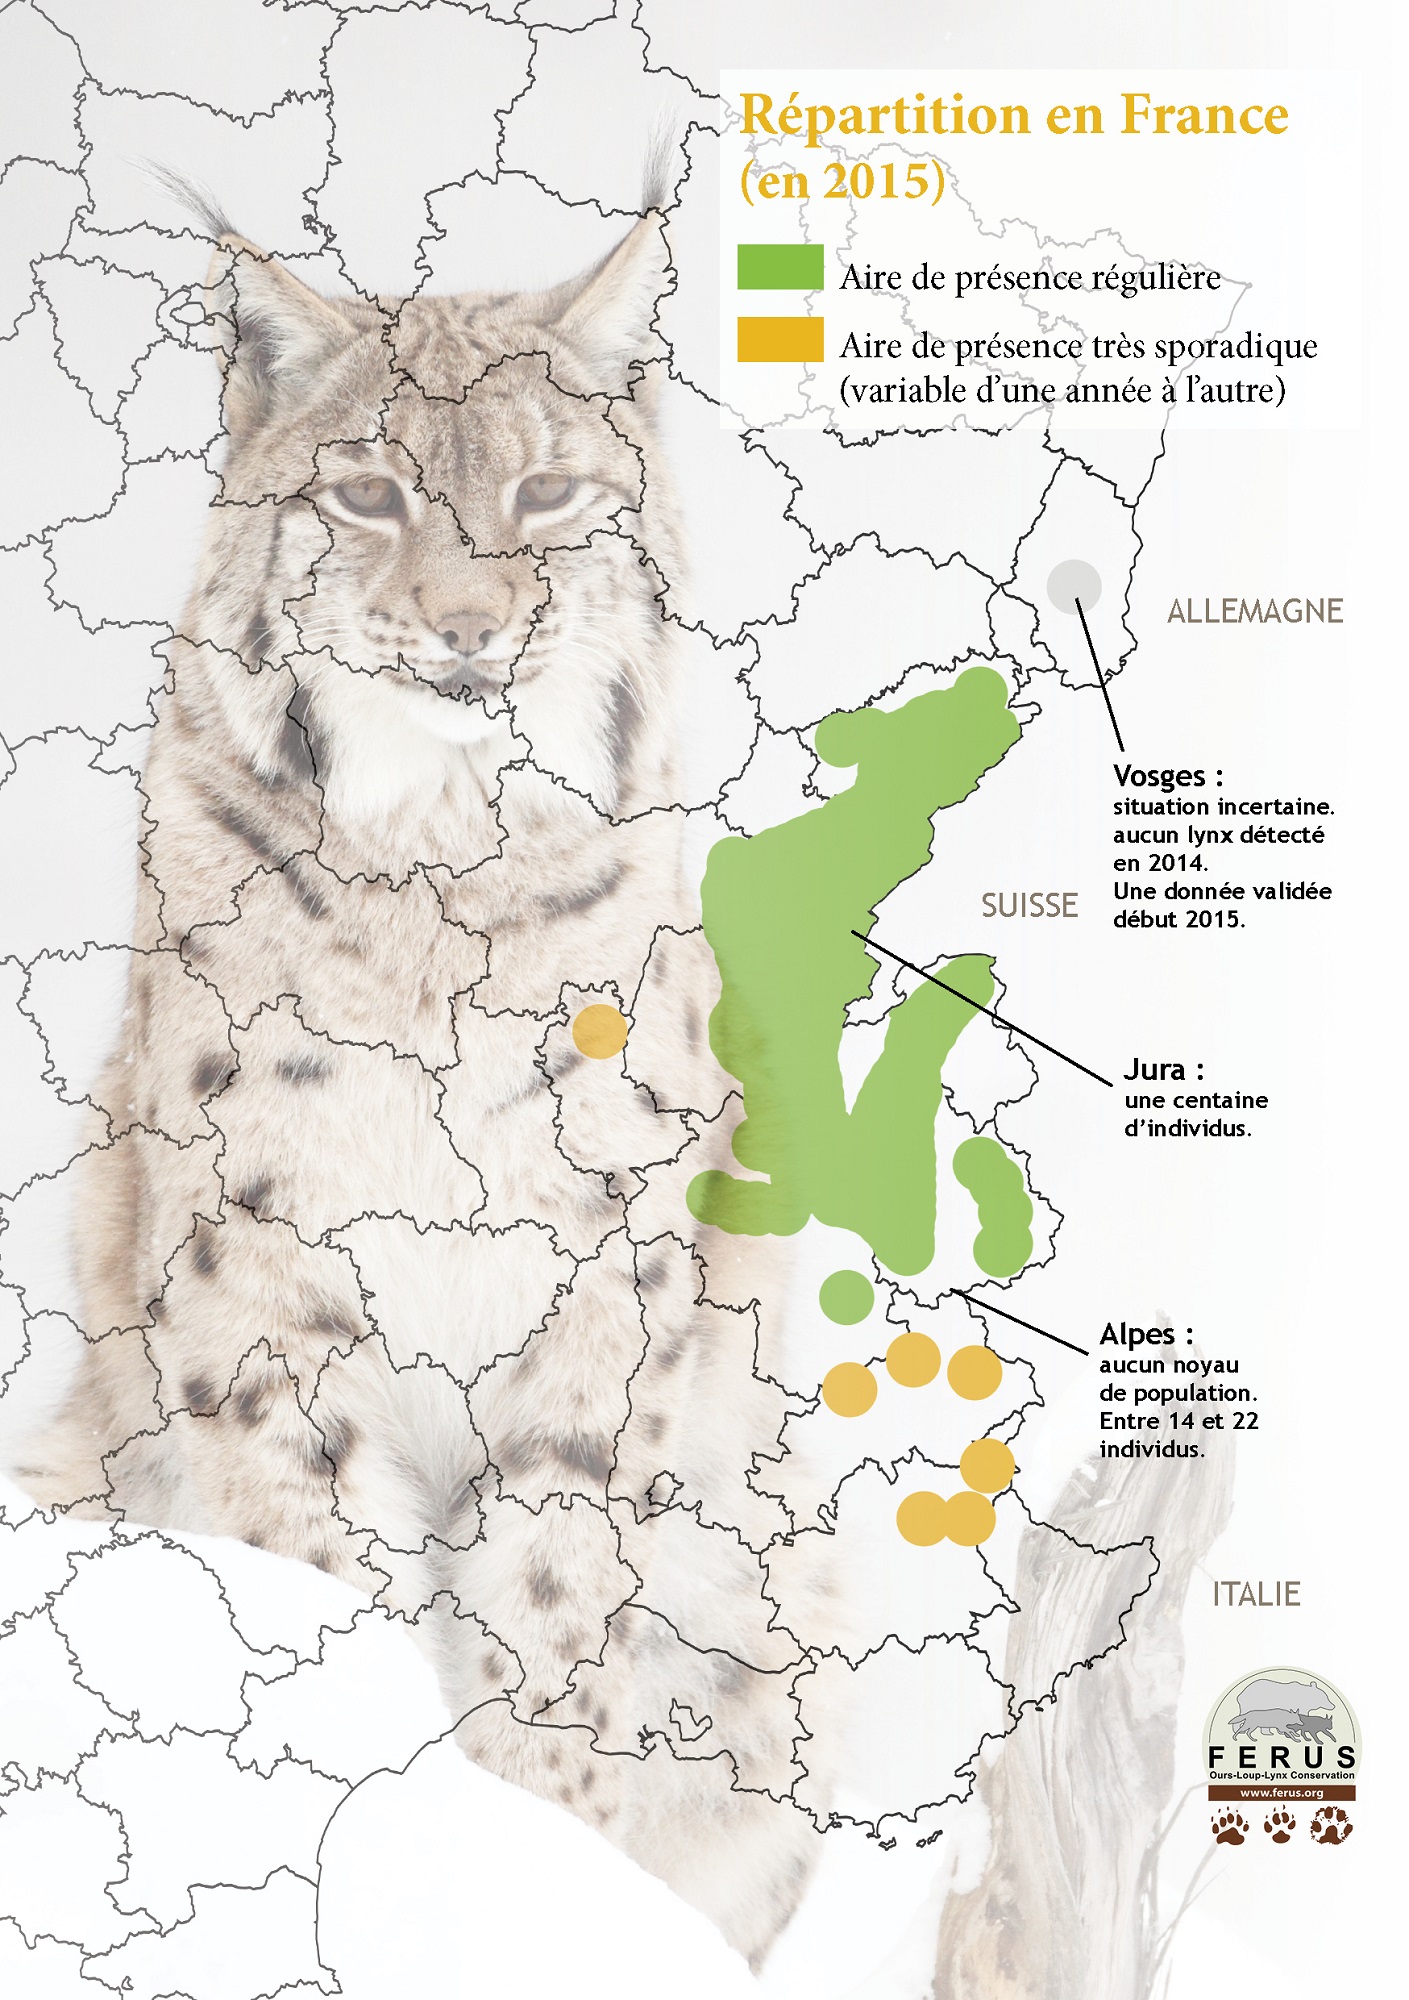 Türkiye: le lynx Ulu a parcouru 2 200 kilomètres en une année